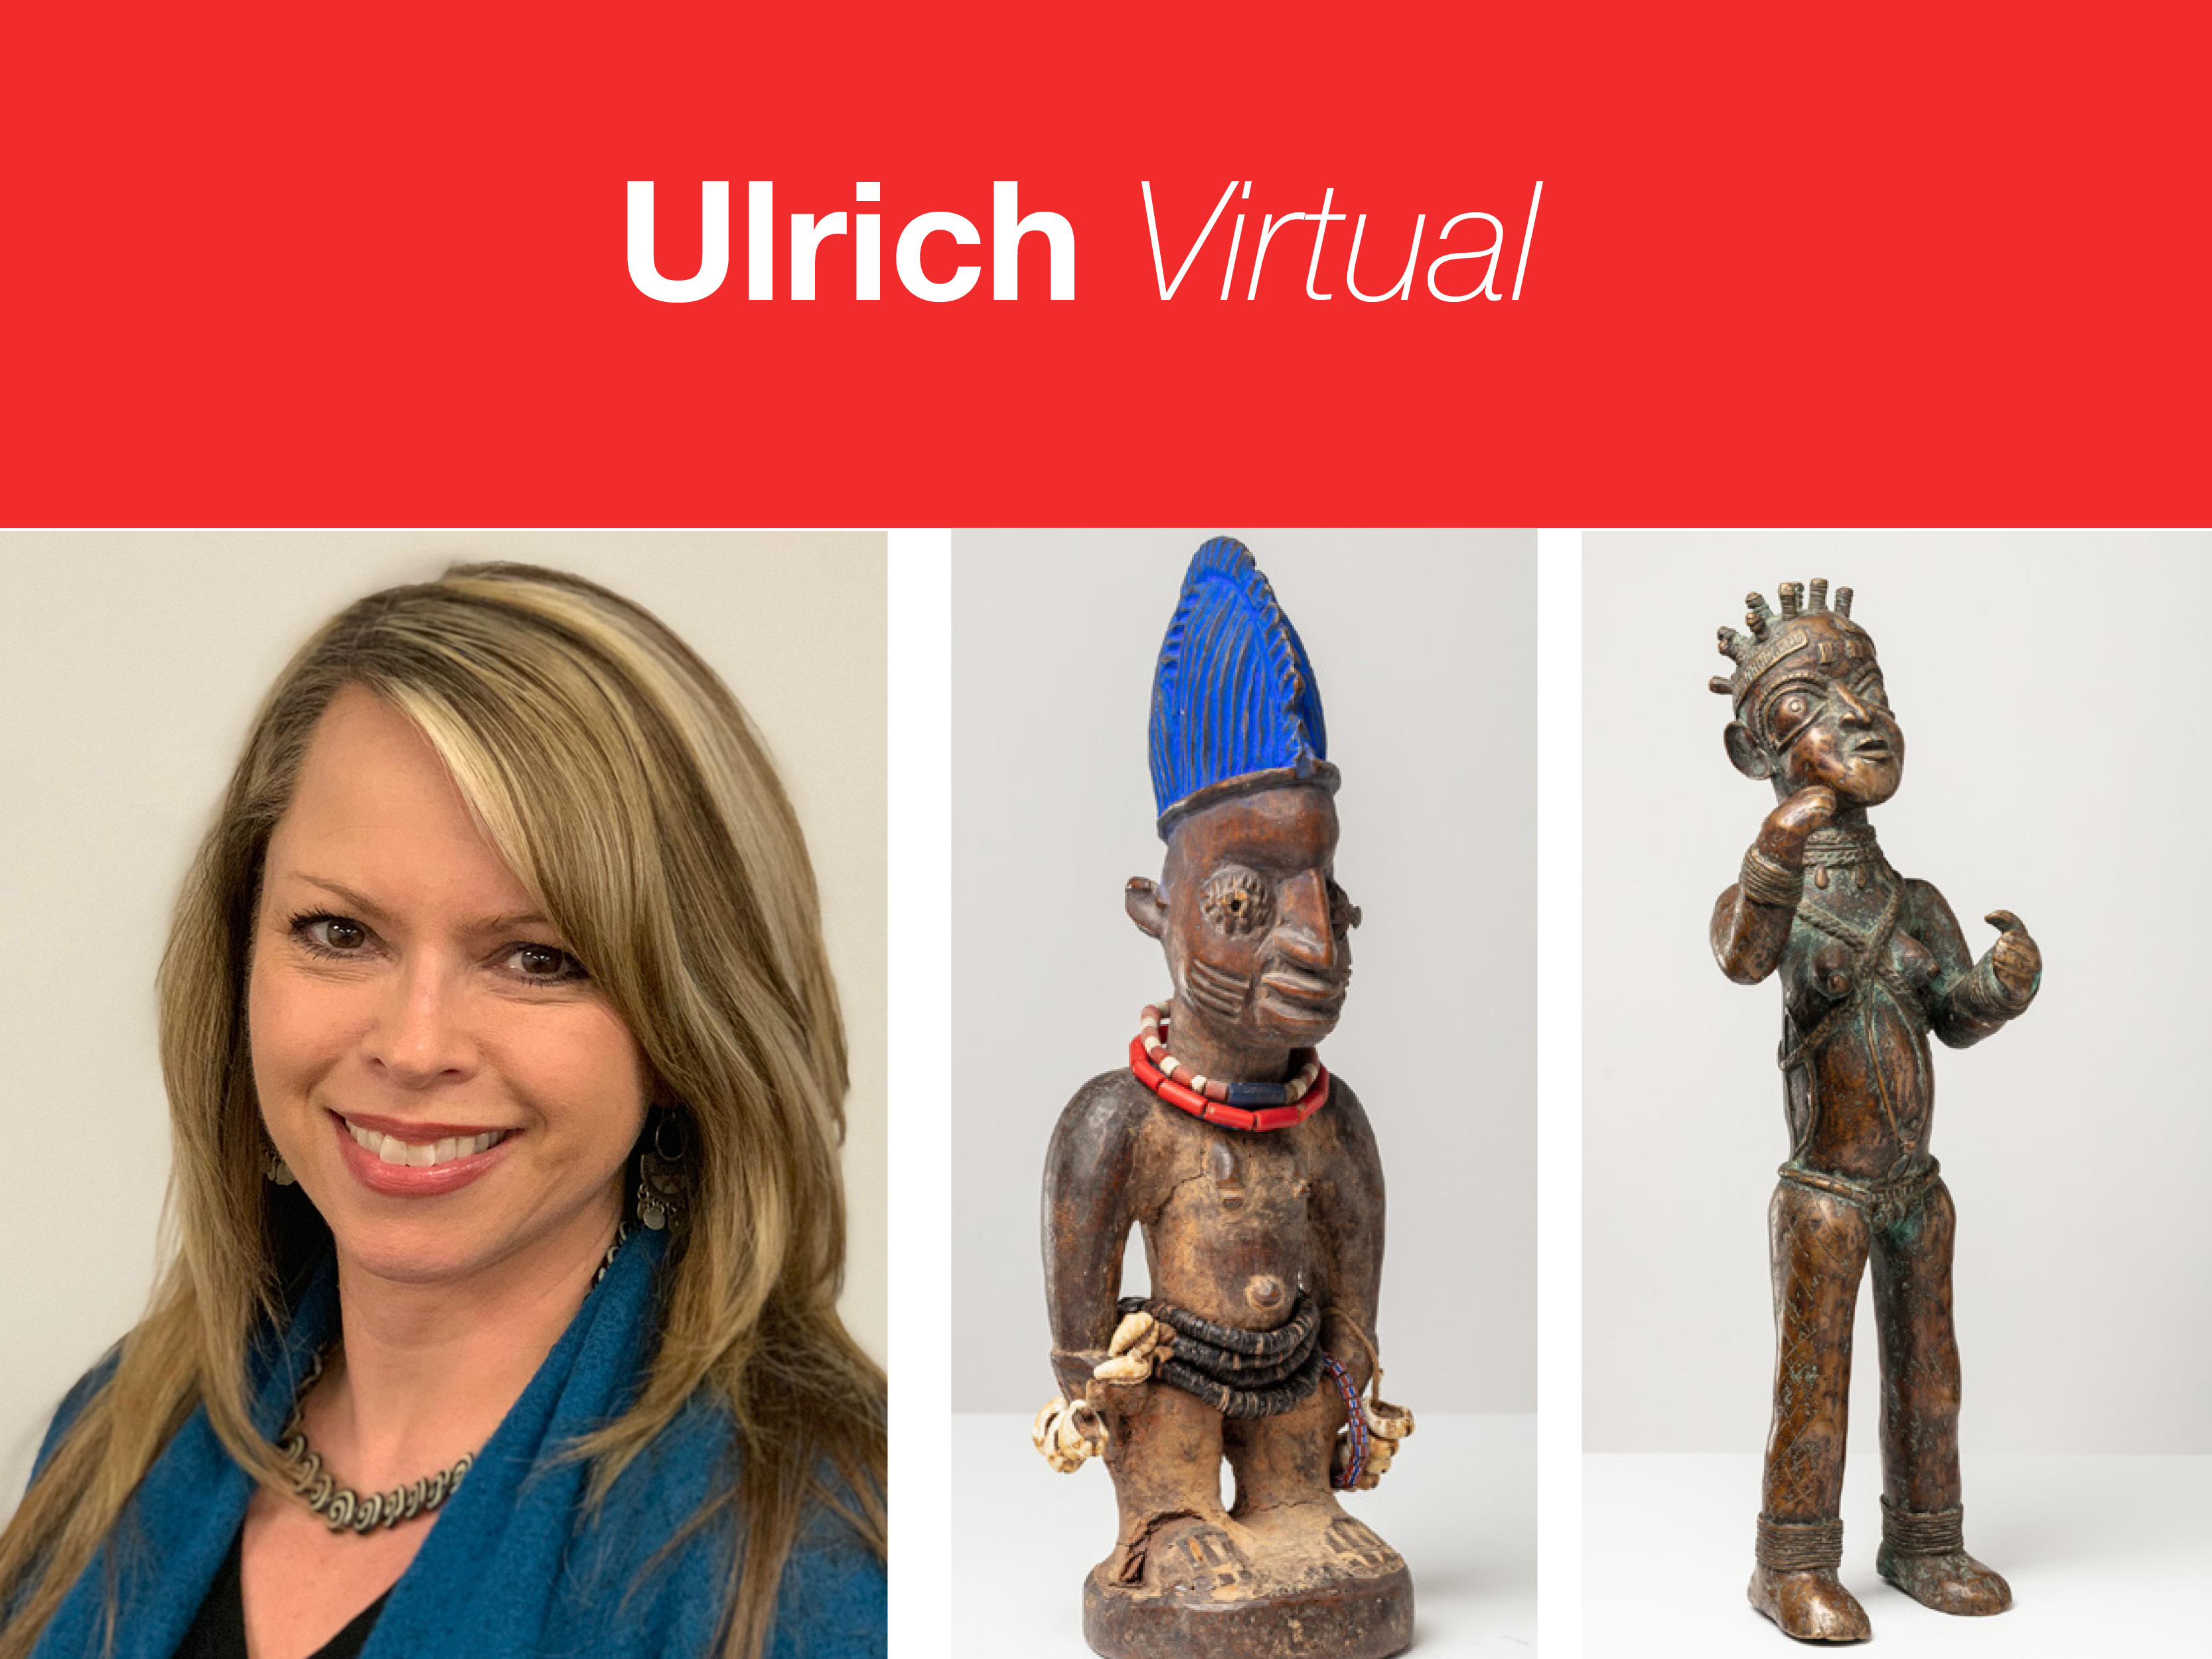 Ulrich Virtual